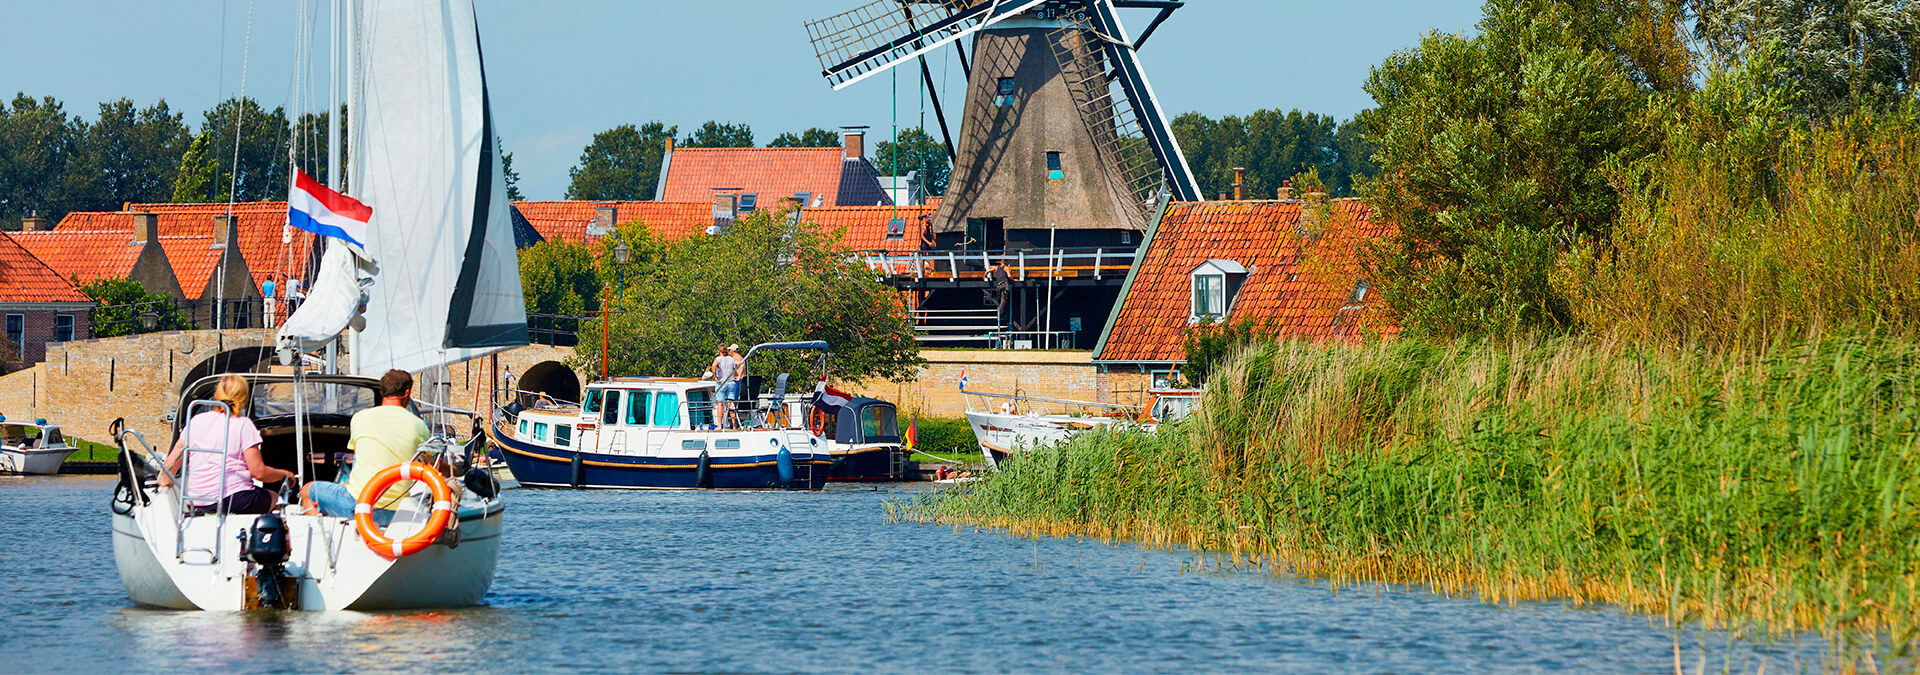 Dutch sailing boats and windmill